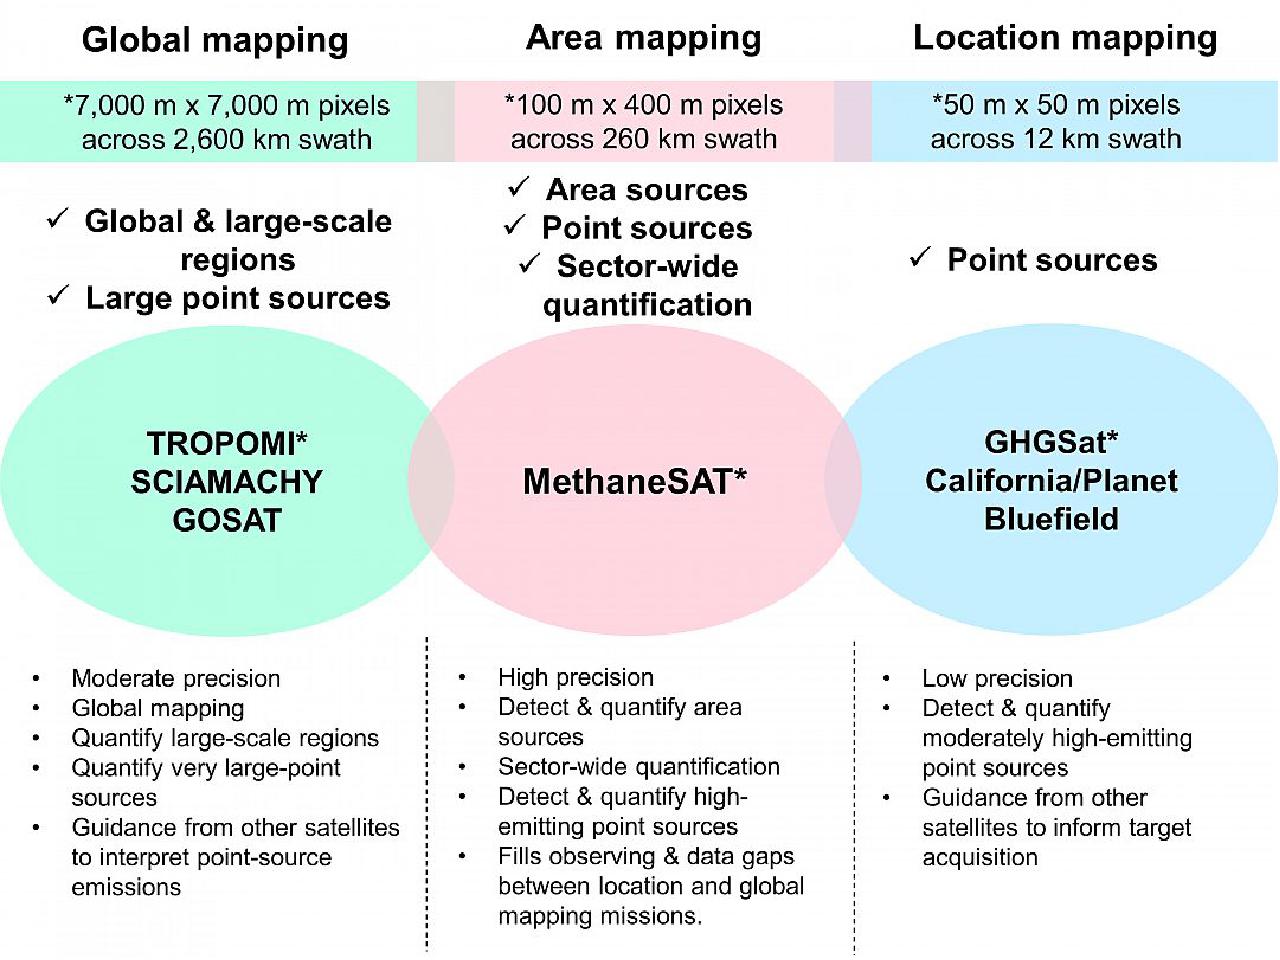 Figure 4: Methane detection system summary comparison (image credit: MethaneSat)